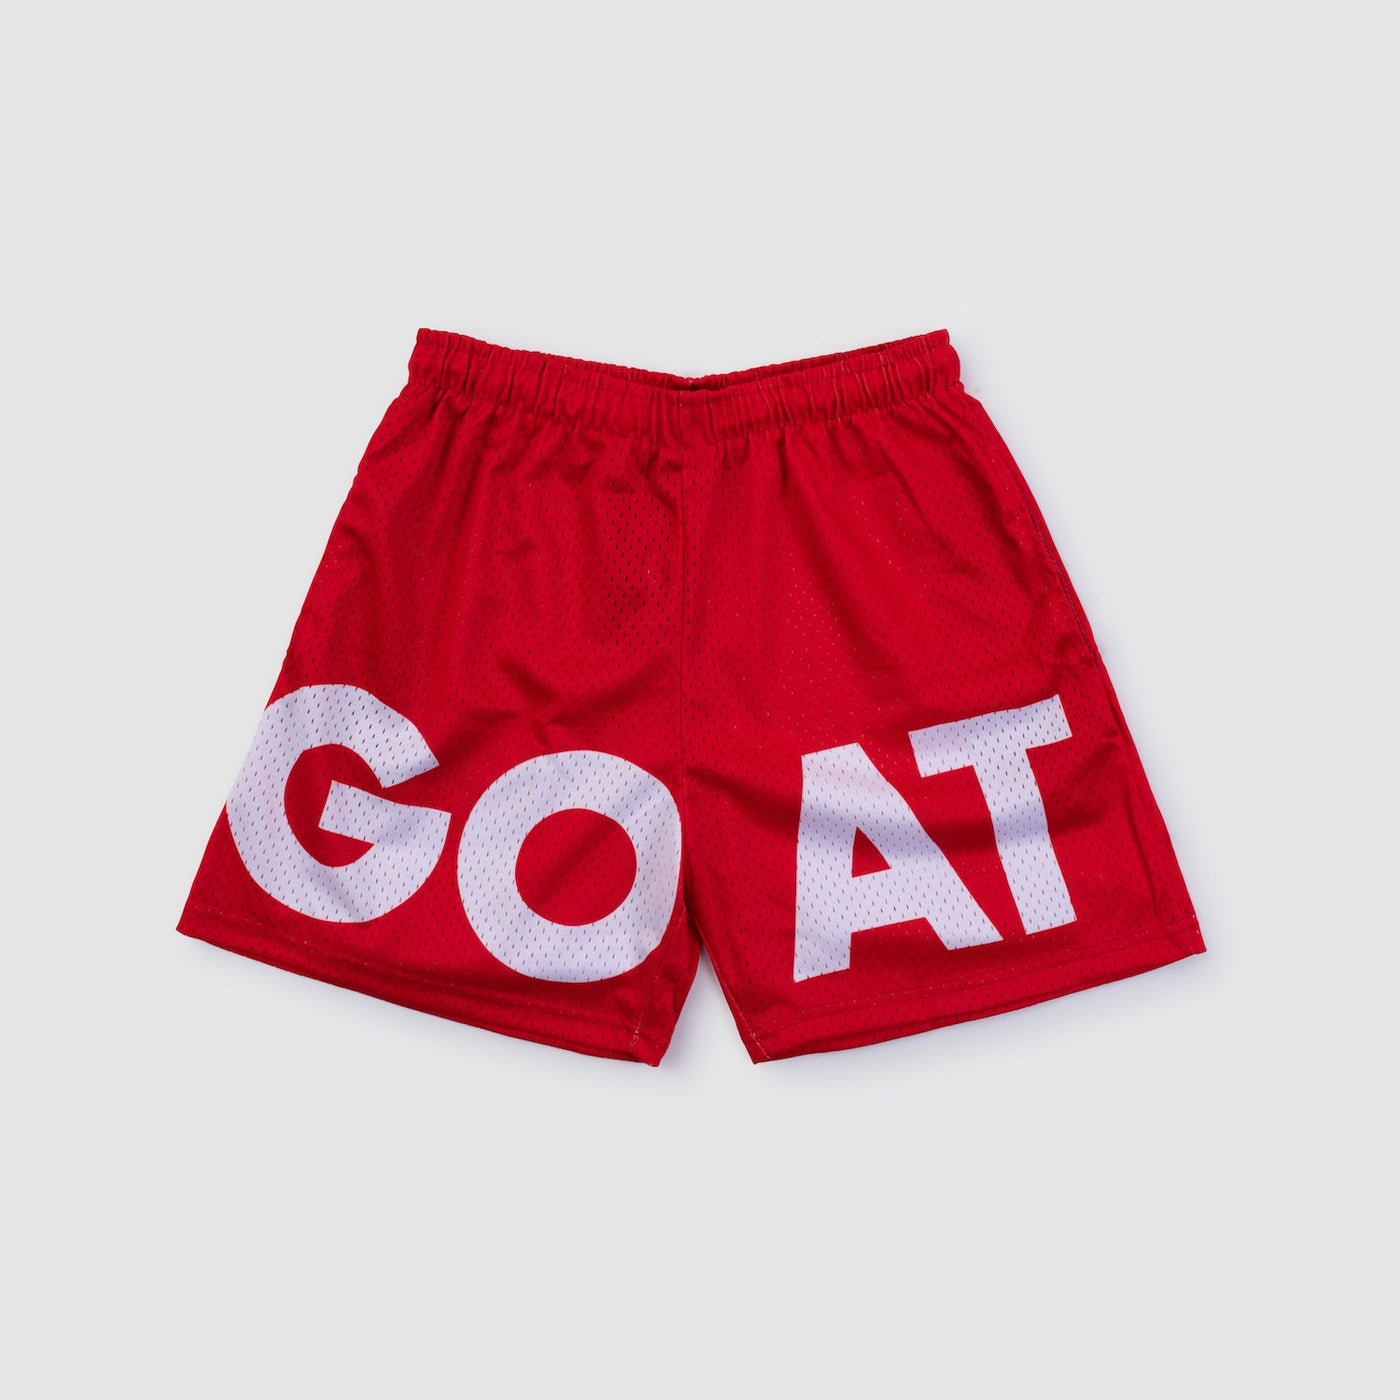 GOAT Mesh Logo Shorts (Red/White)